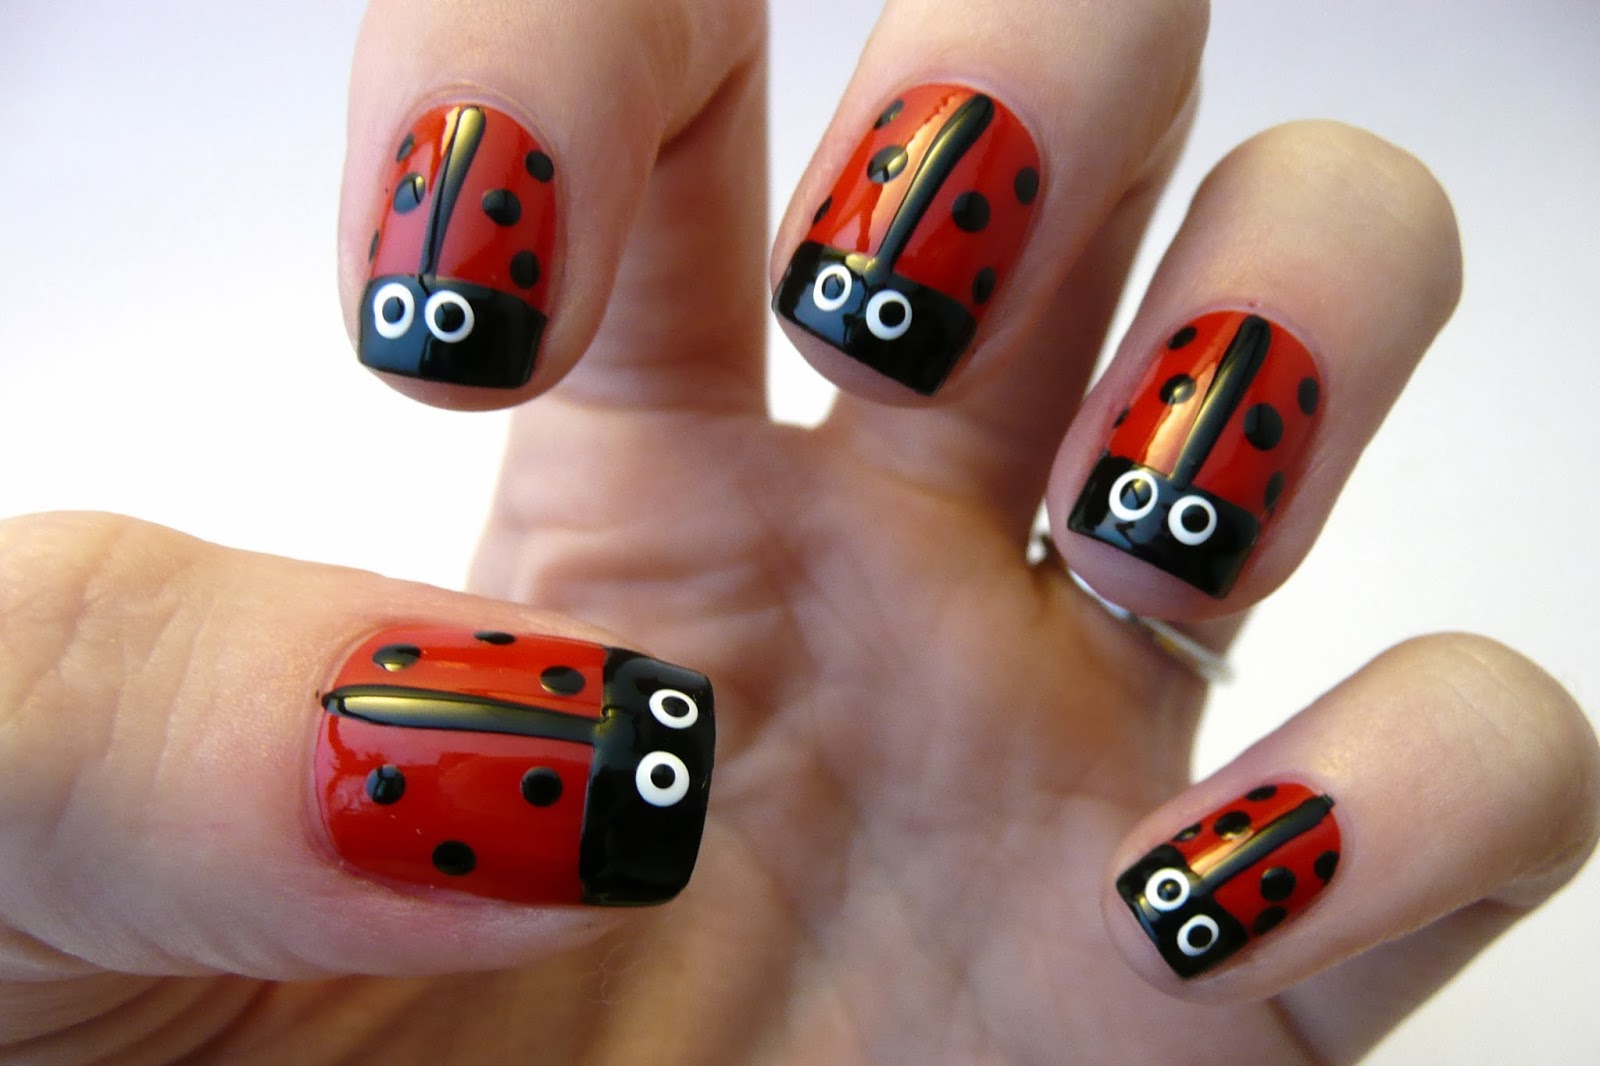 3. Ladybug Nail Art Tutorial - wide 7